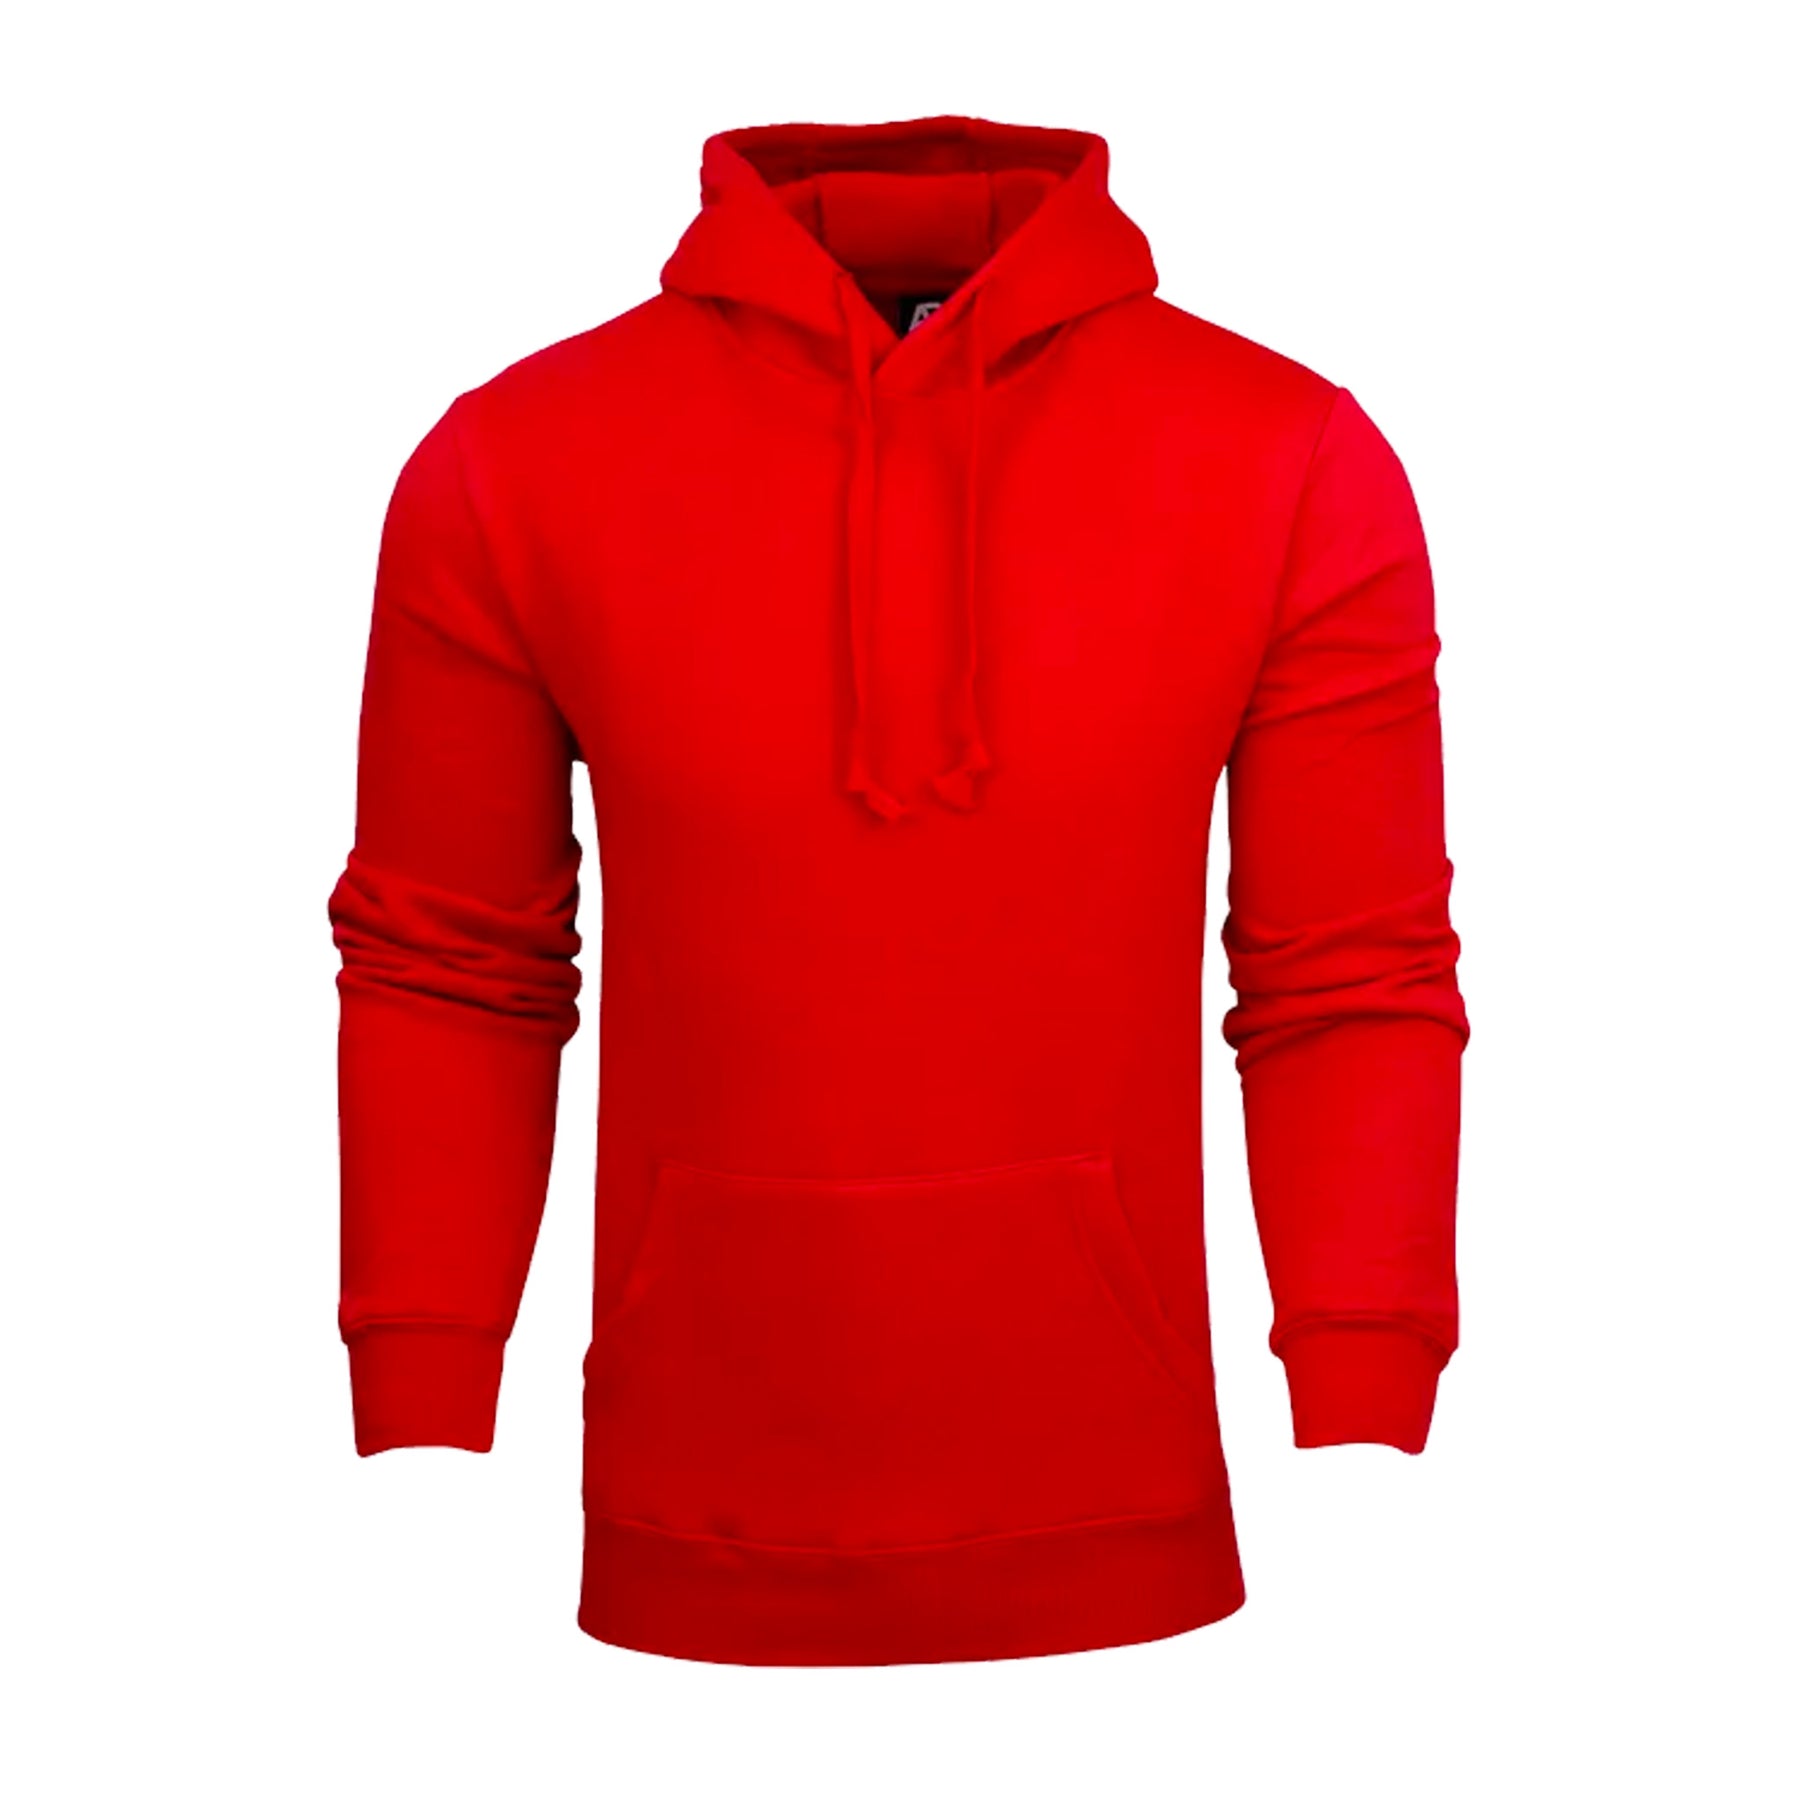 torquay hoodie in red